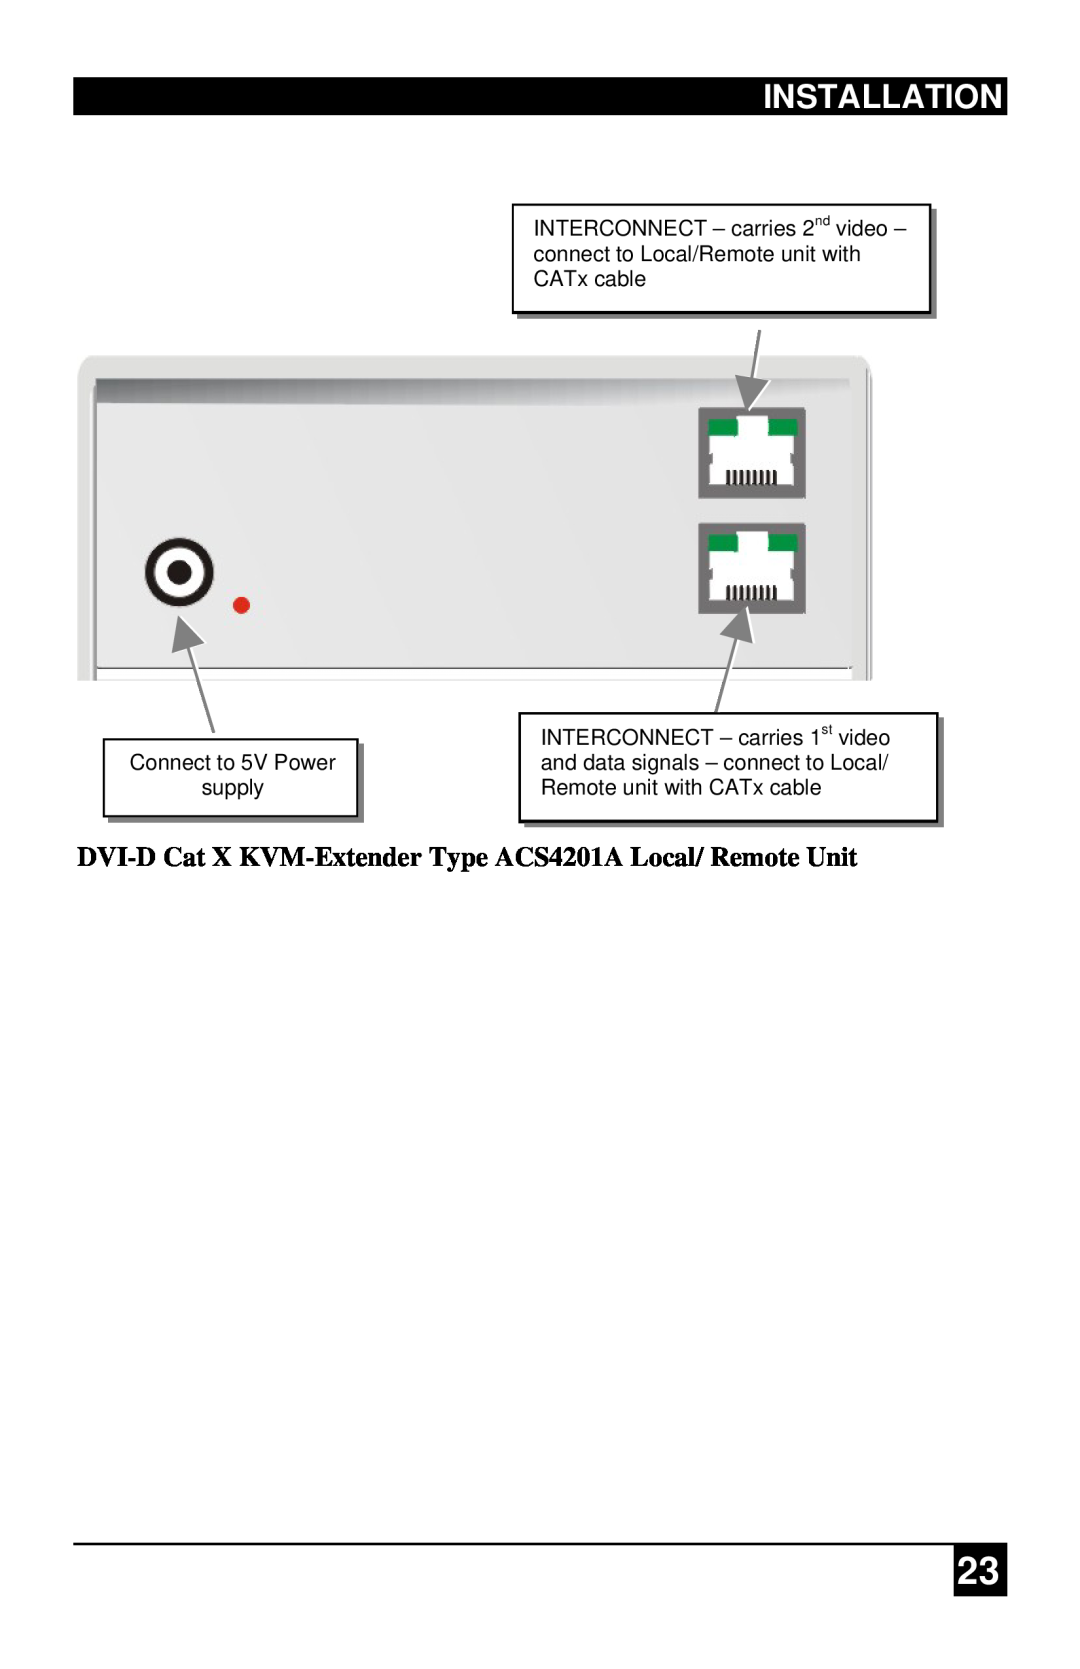 Black Box ACS4201A, ACS1009A manual Installation 